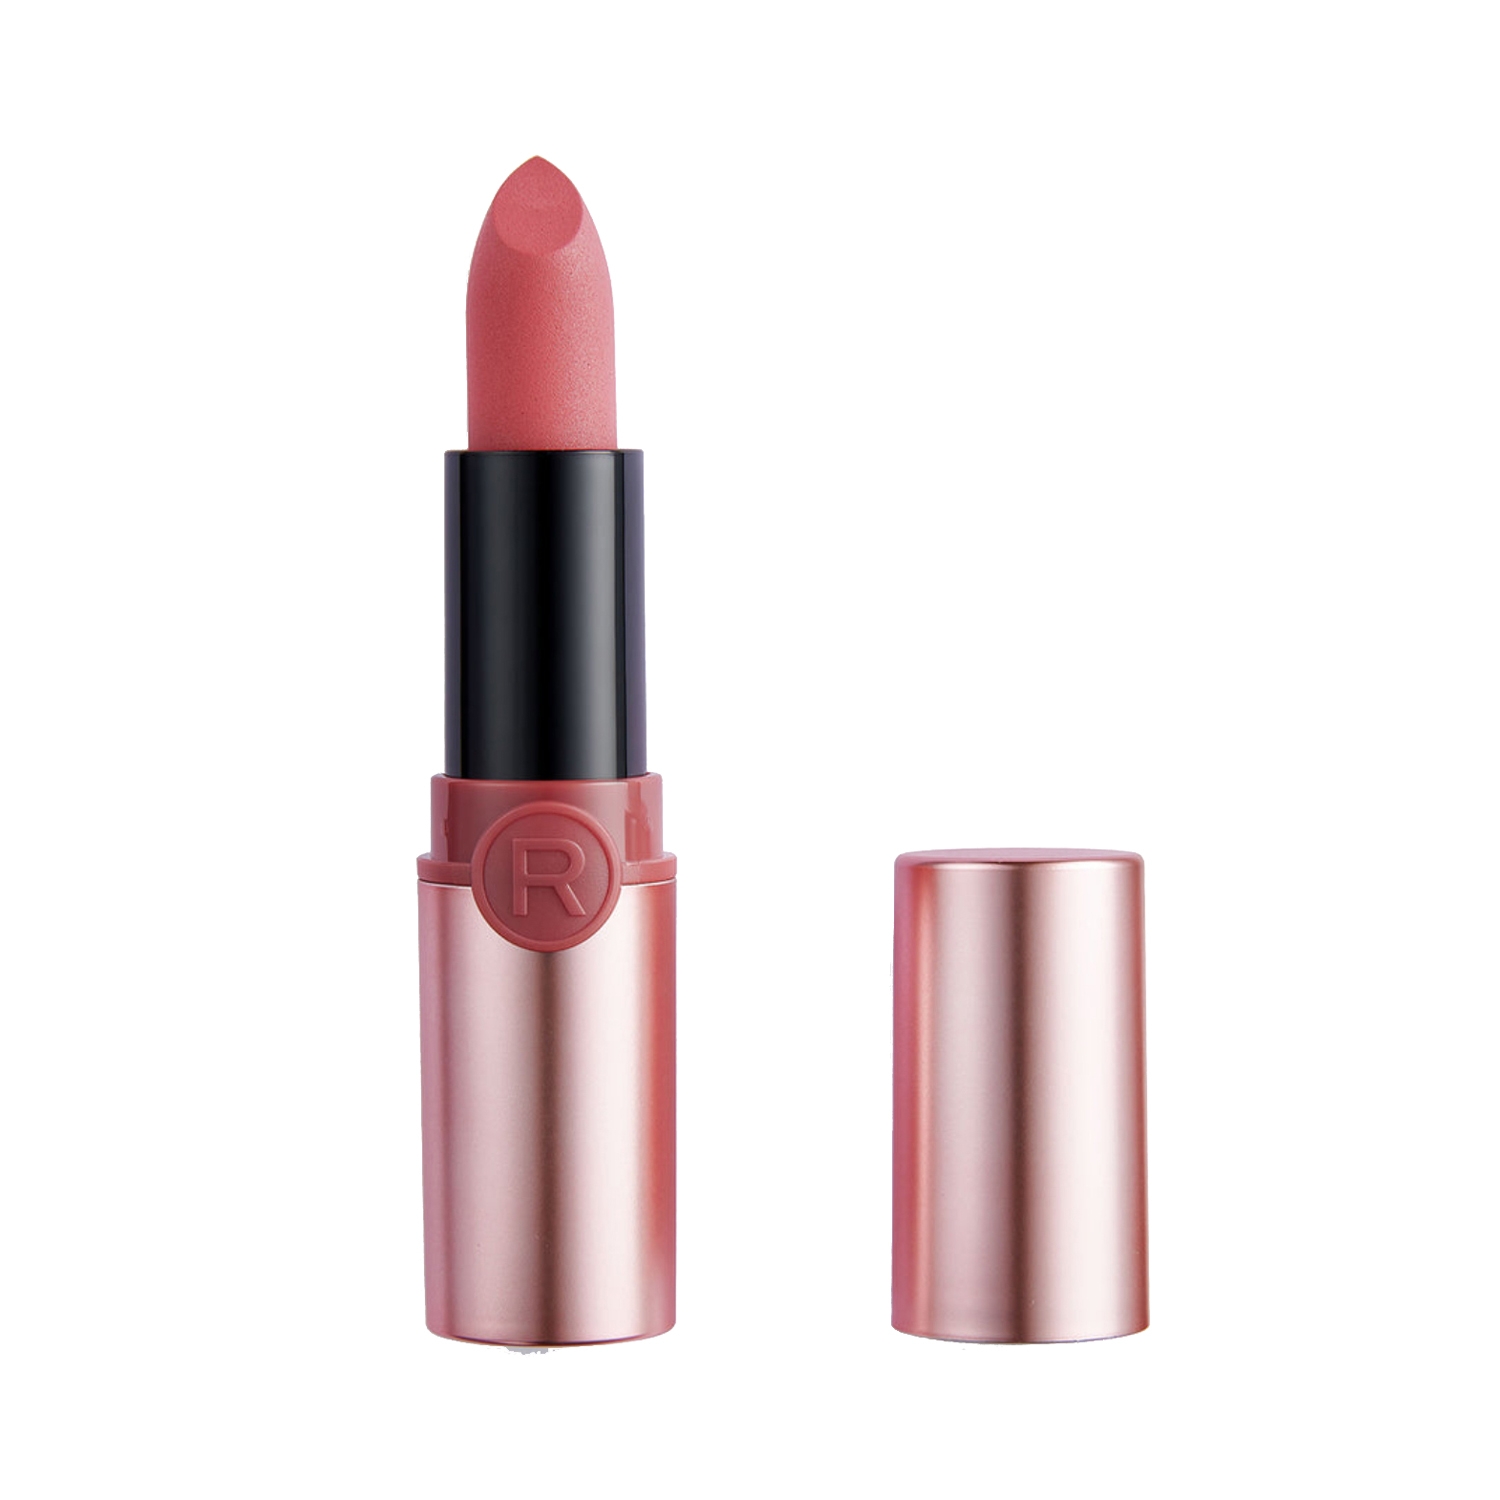 Makeup Revolution | Makeup Revolution Powder Matte Lipstick - Rosy (3.5g)